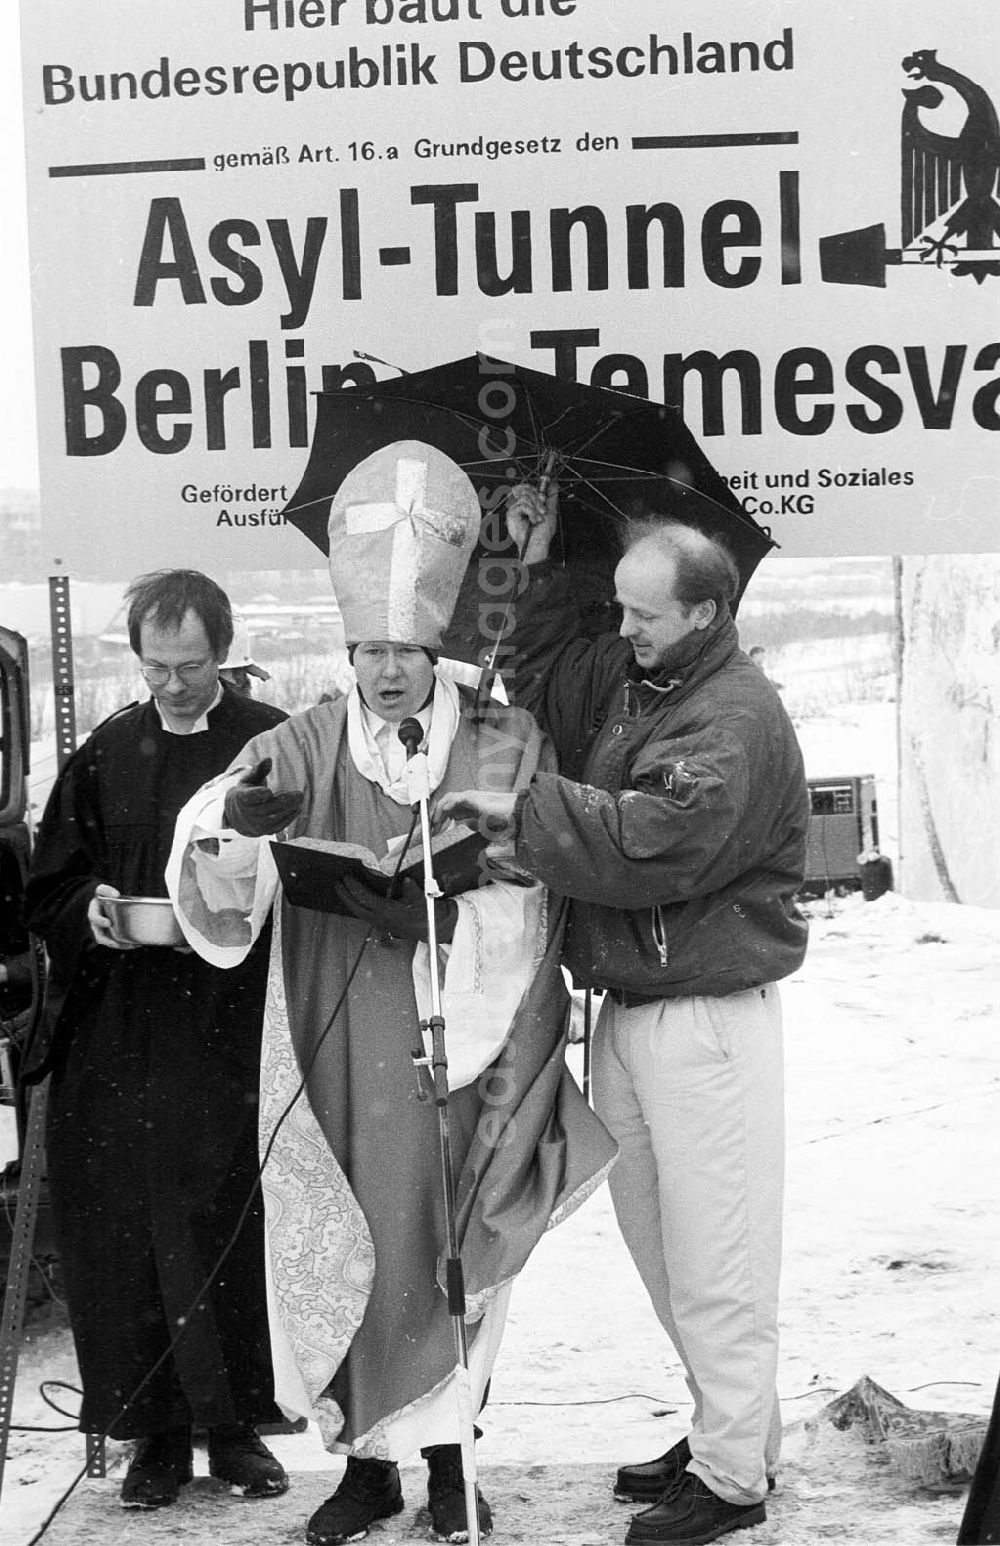 GDR image archive: Berlin - Umschlagsnr.: 1993-59